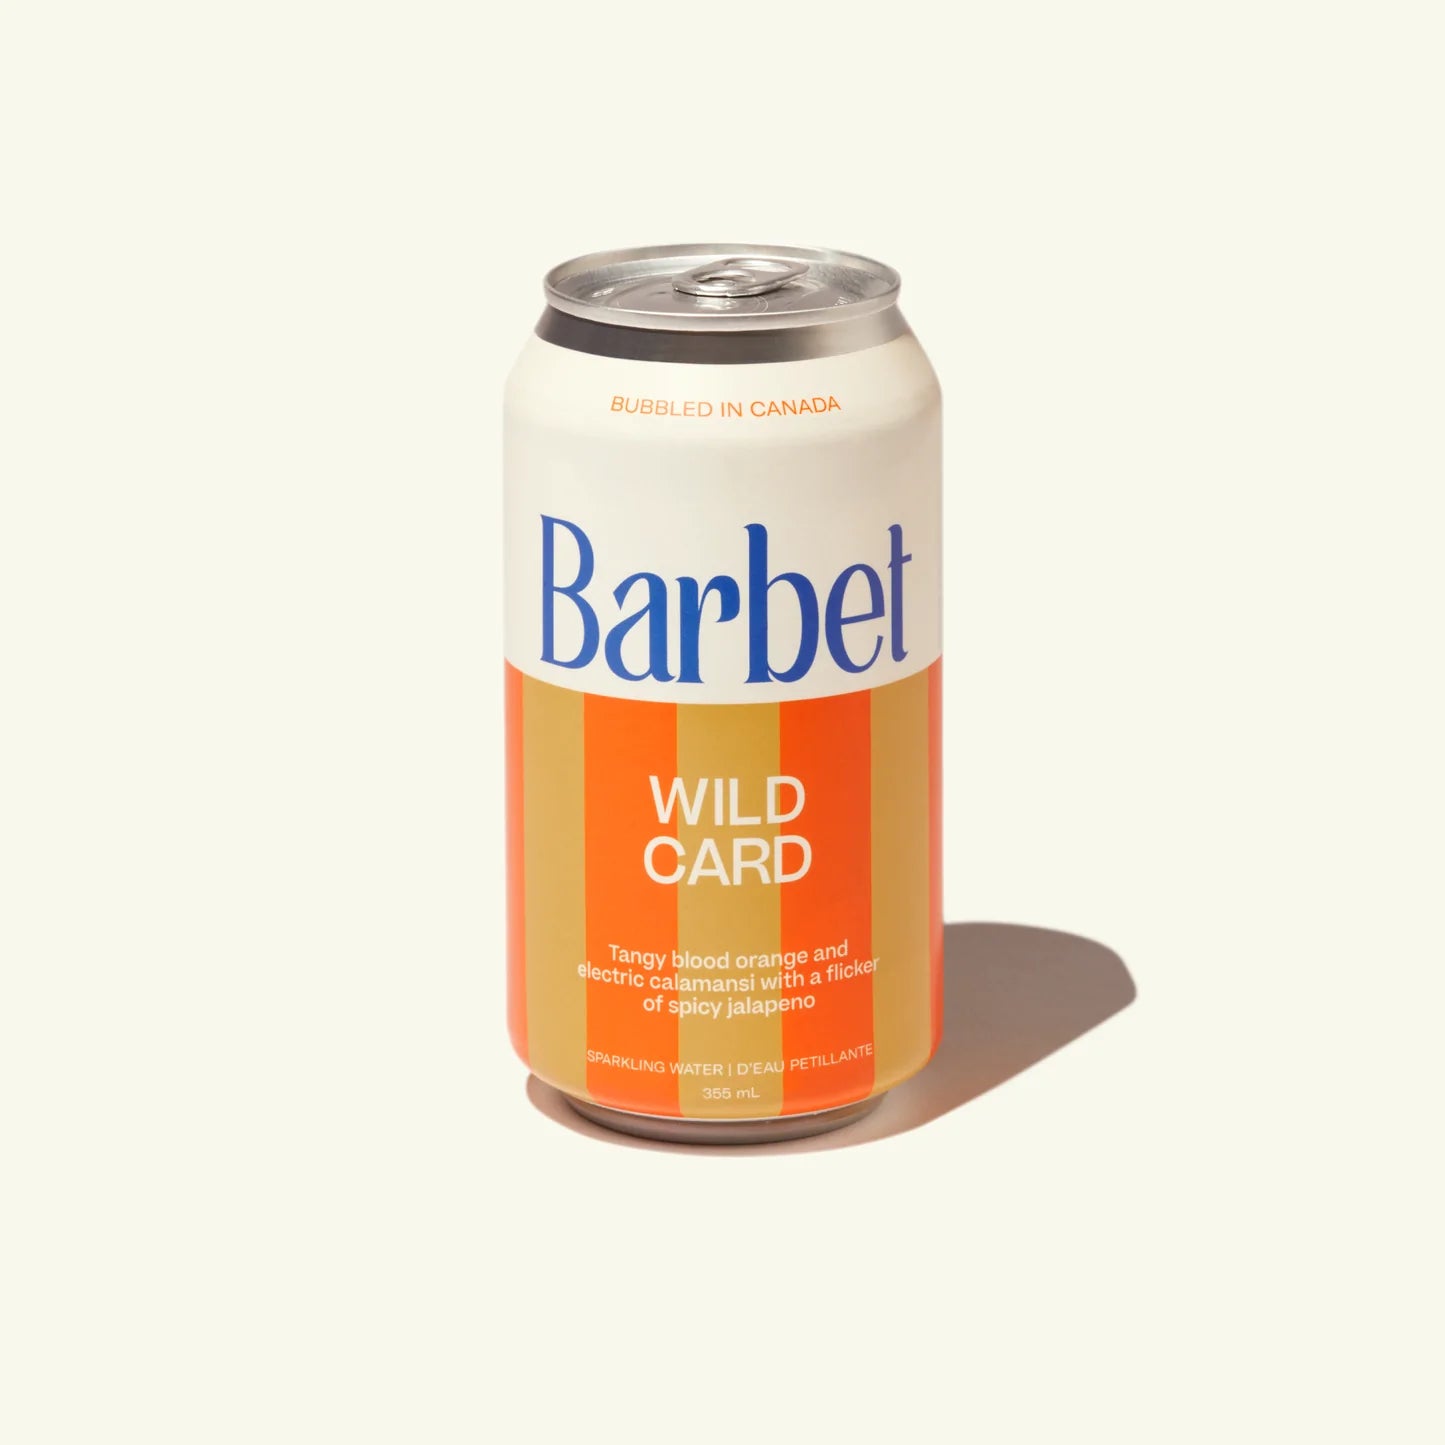 Barbet Drinks